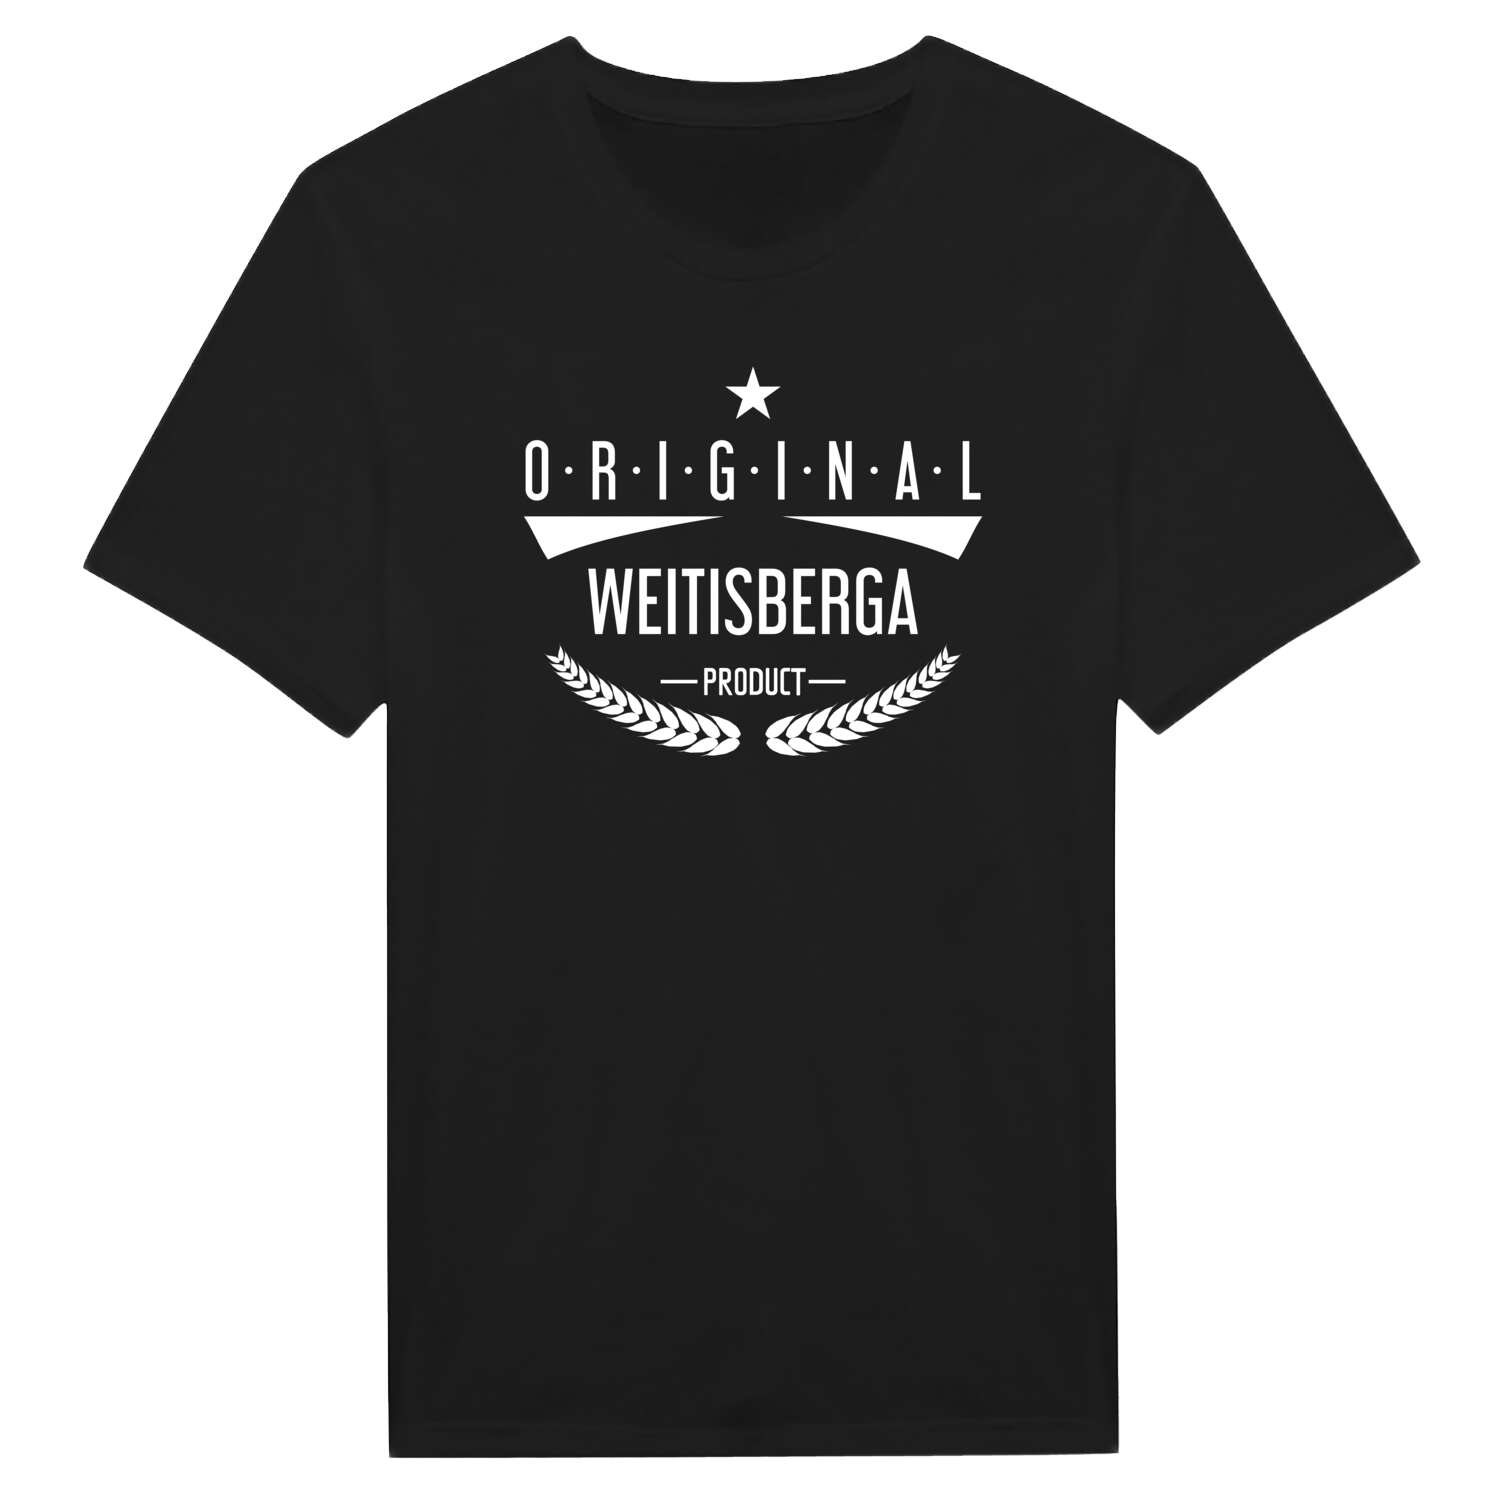 Weitisberga T-Shirt »Original Product«